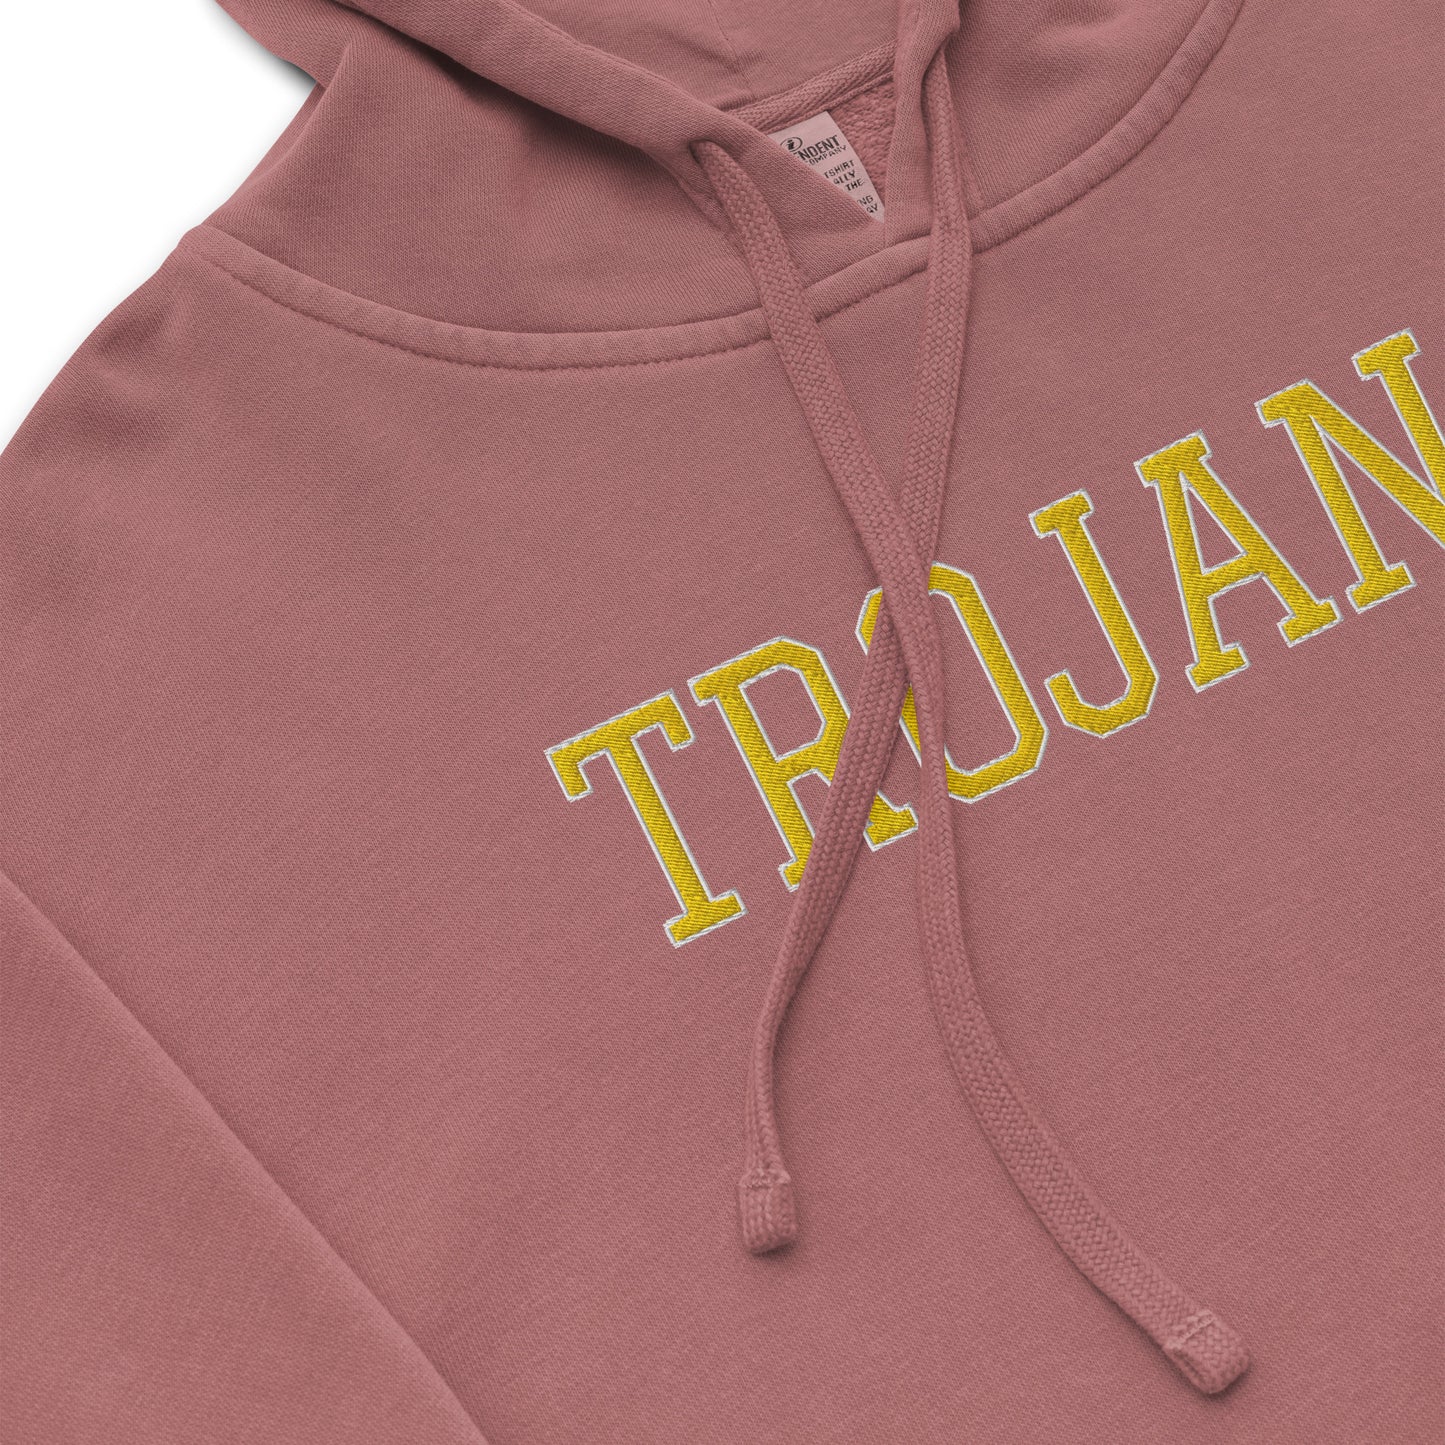 Trojans Embroidered Vintage Wash Hoodie